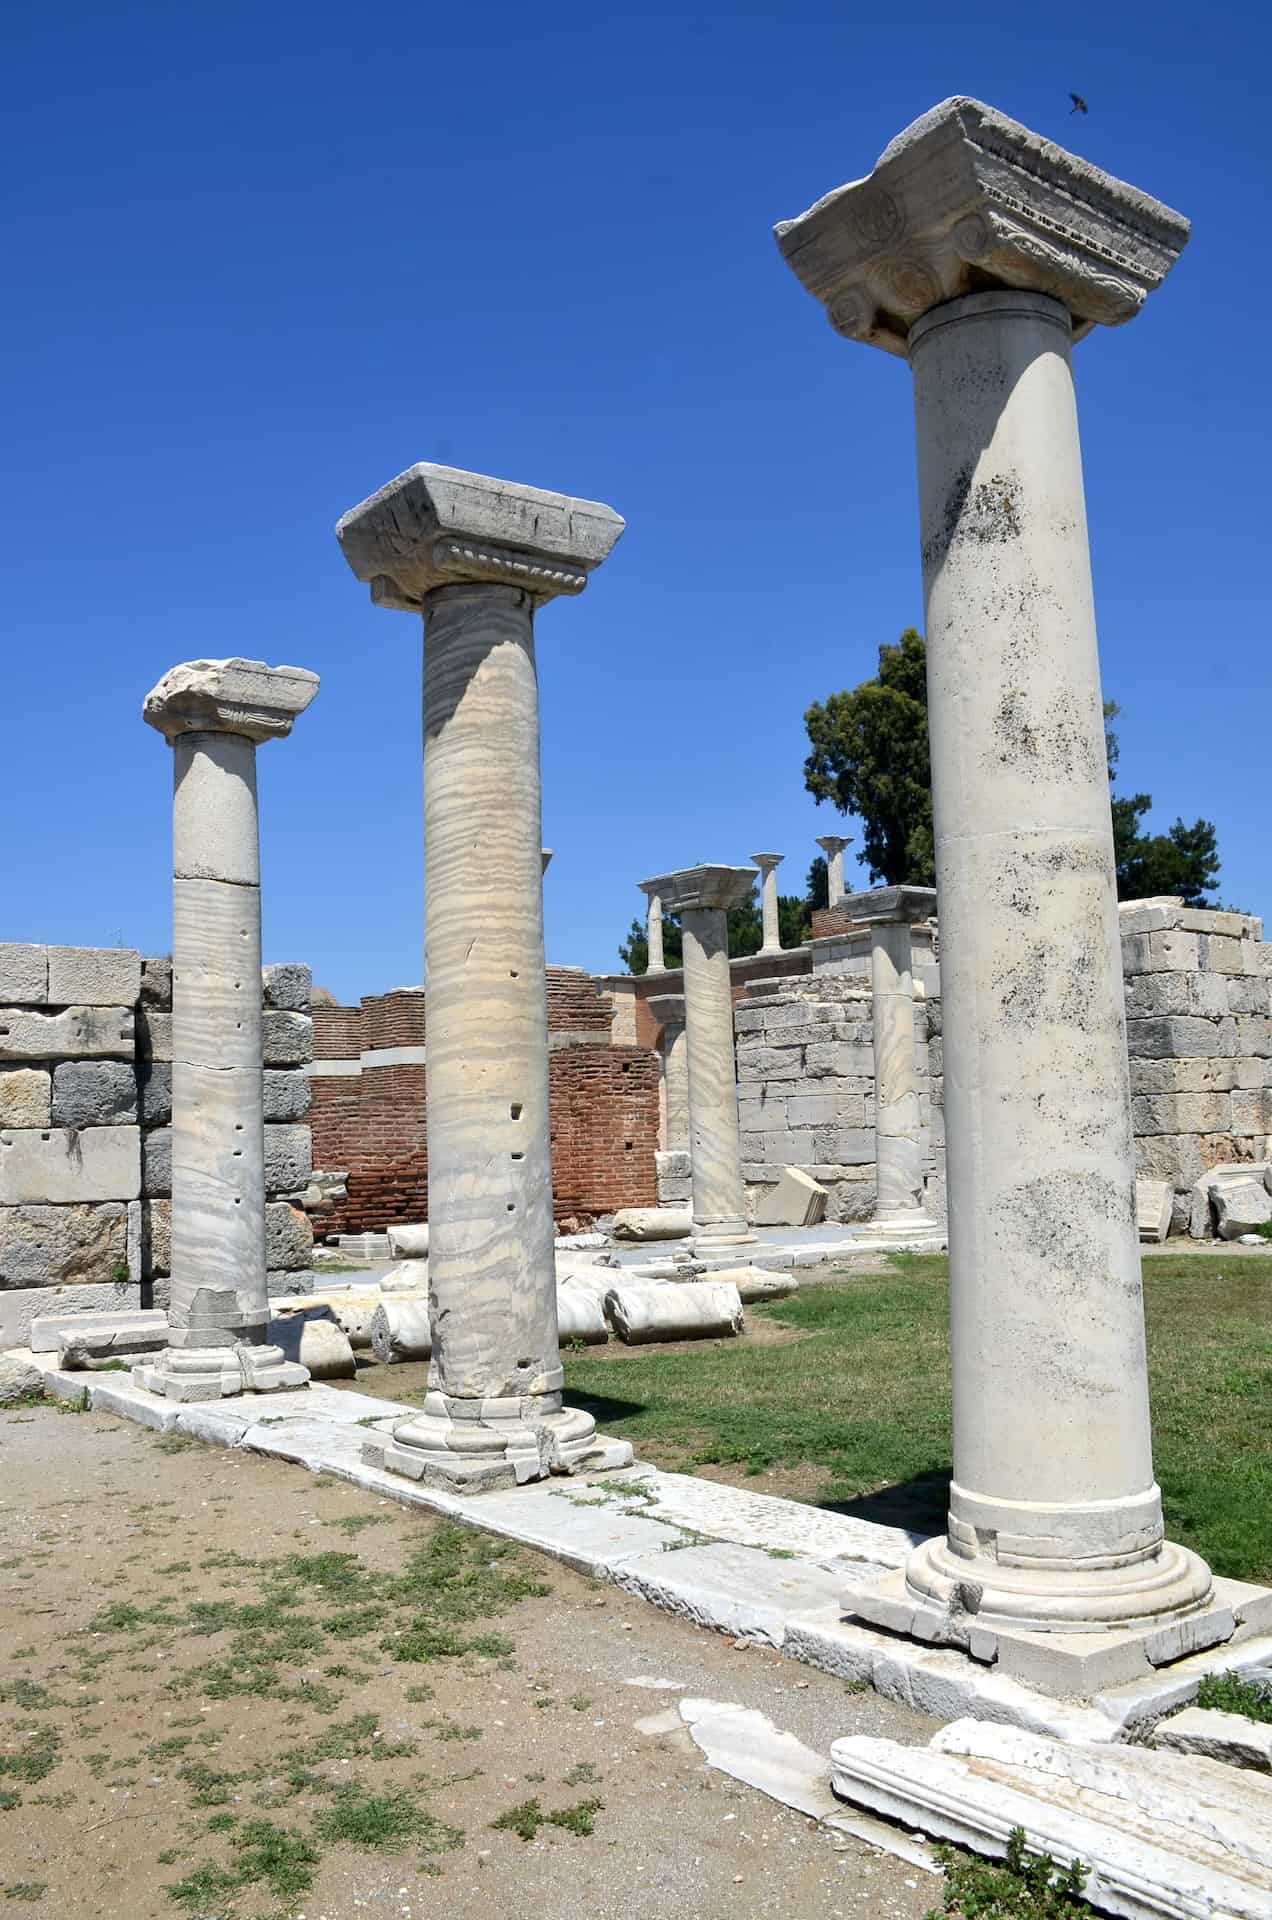 Columns of the south transept of the Basilica of Saint John in Selçuk, Turkey